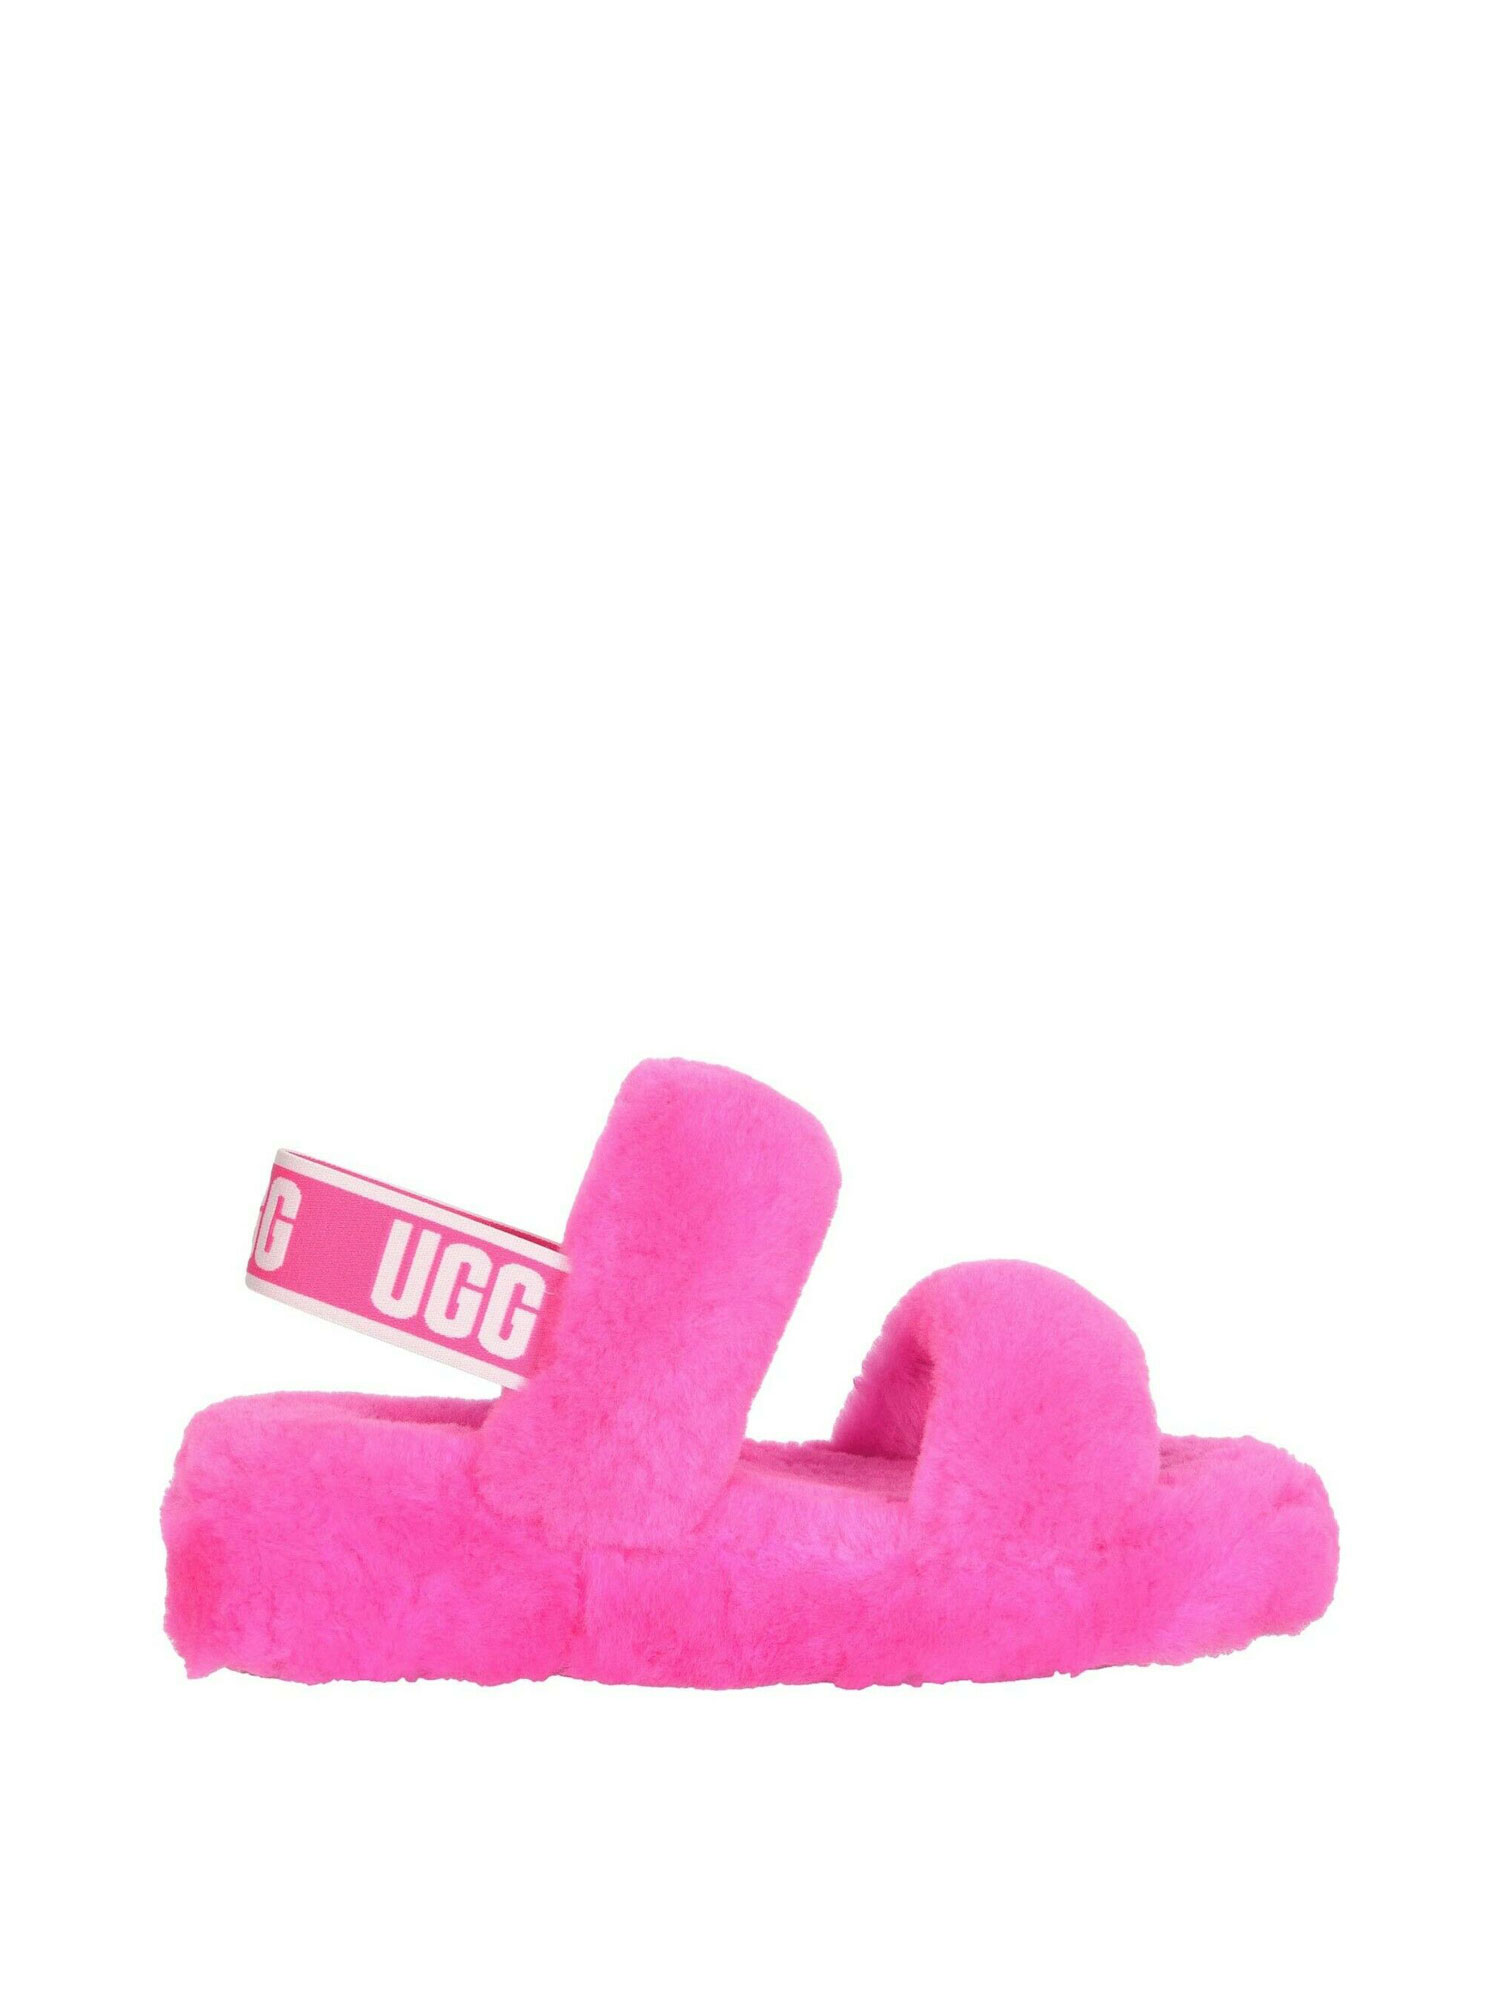 UGG Oh Yeah Slide Women's Sheepskin Slipper Sandals 1107953 - image 2 of 5